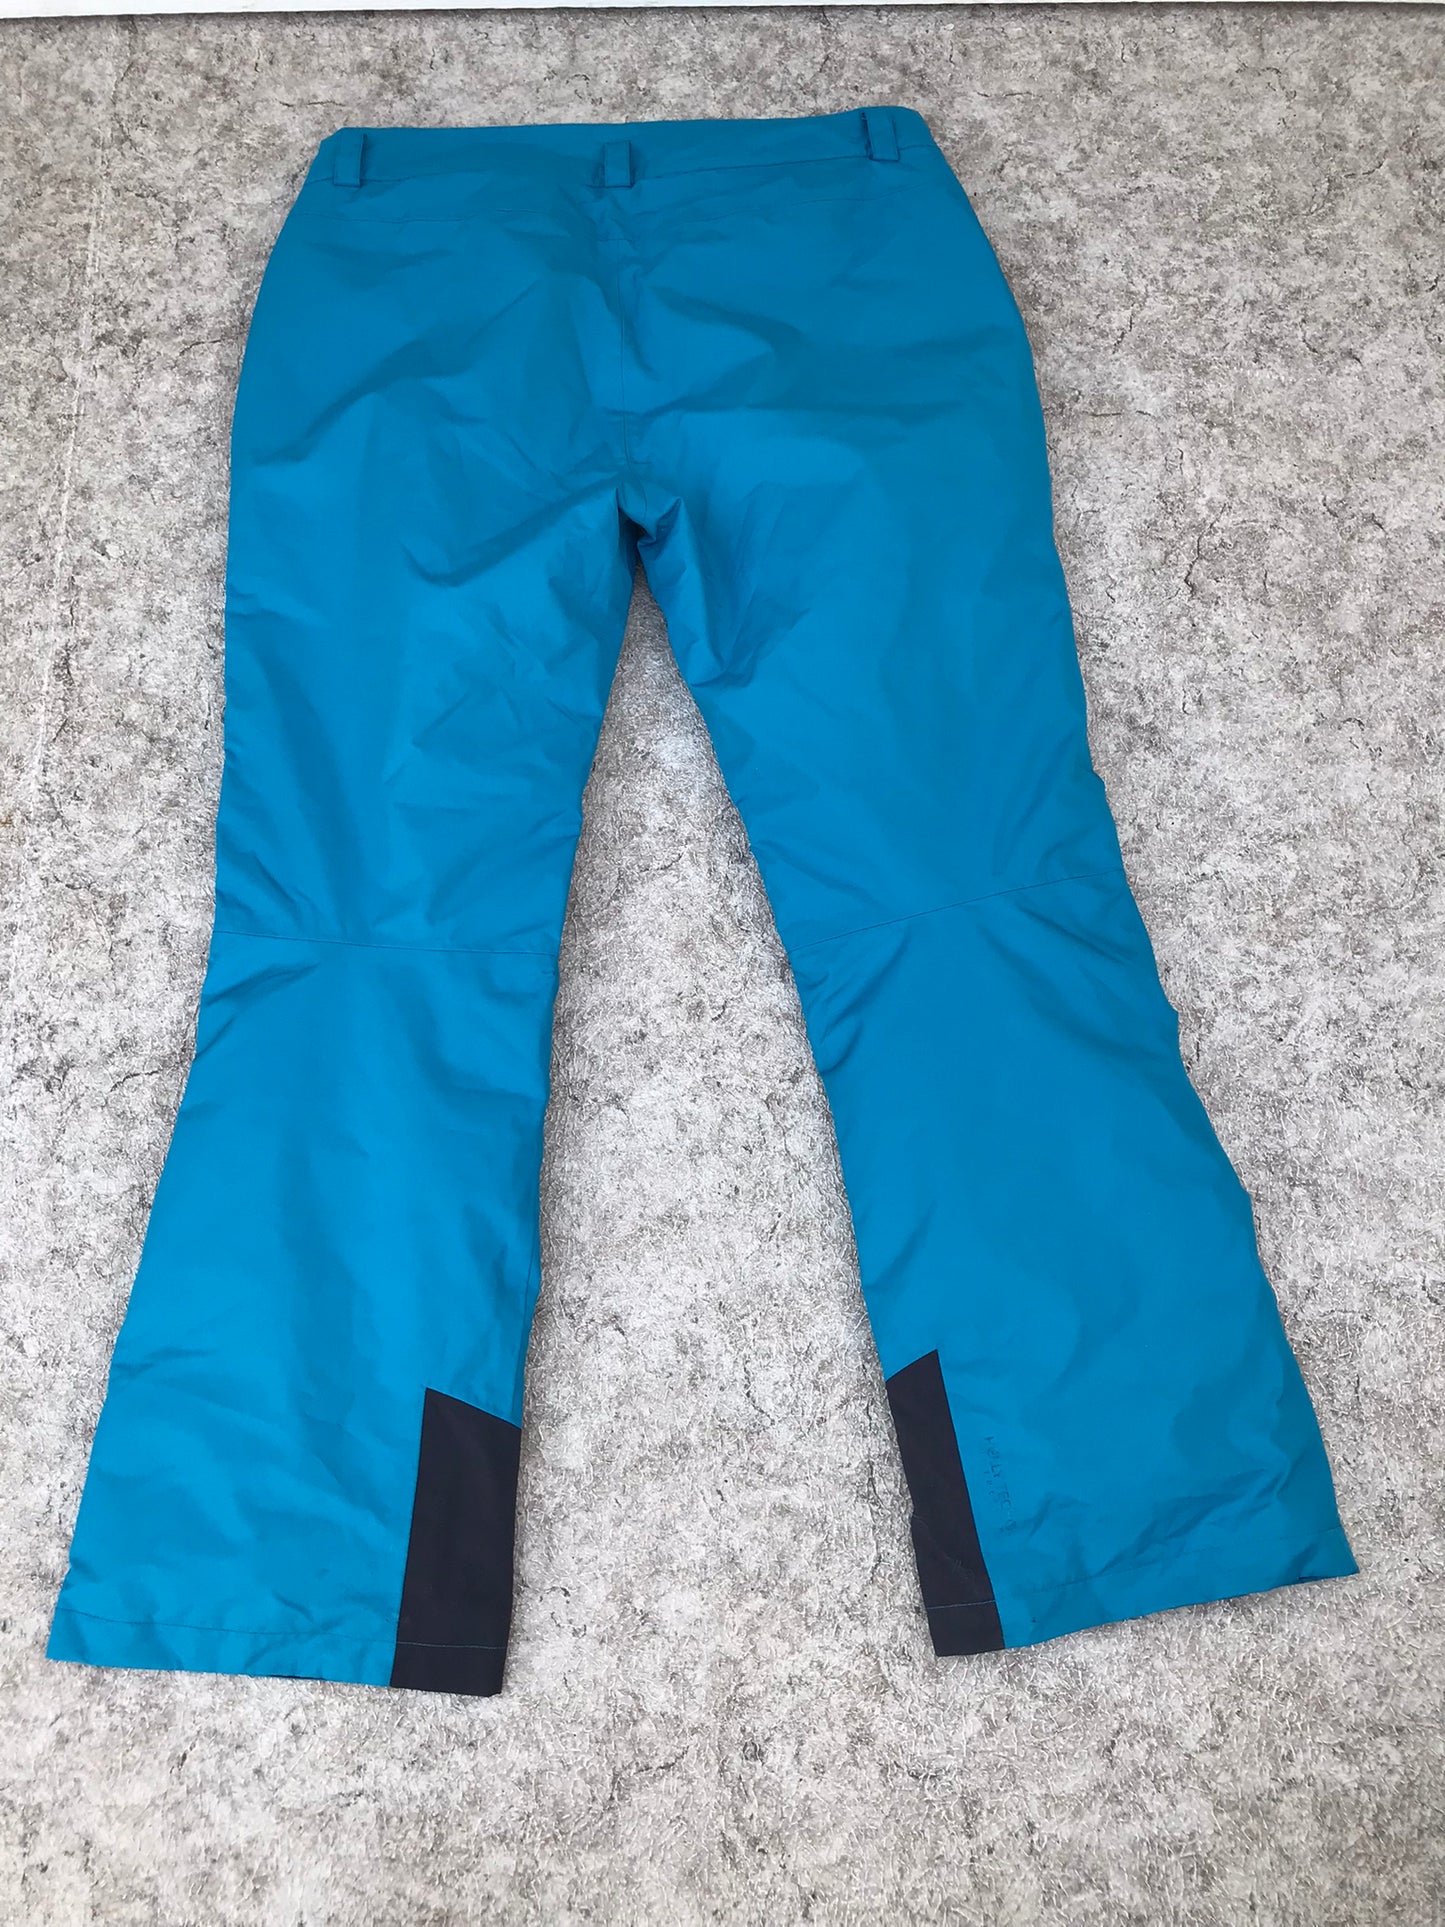 Snow Pants Men's Size XX-Large Helly Hansen Aqua Blue New Outstanding Quality